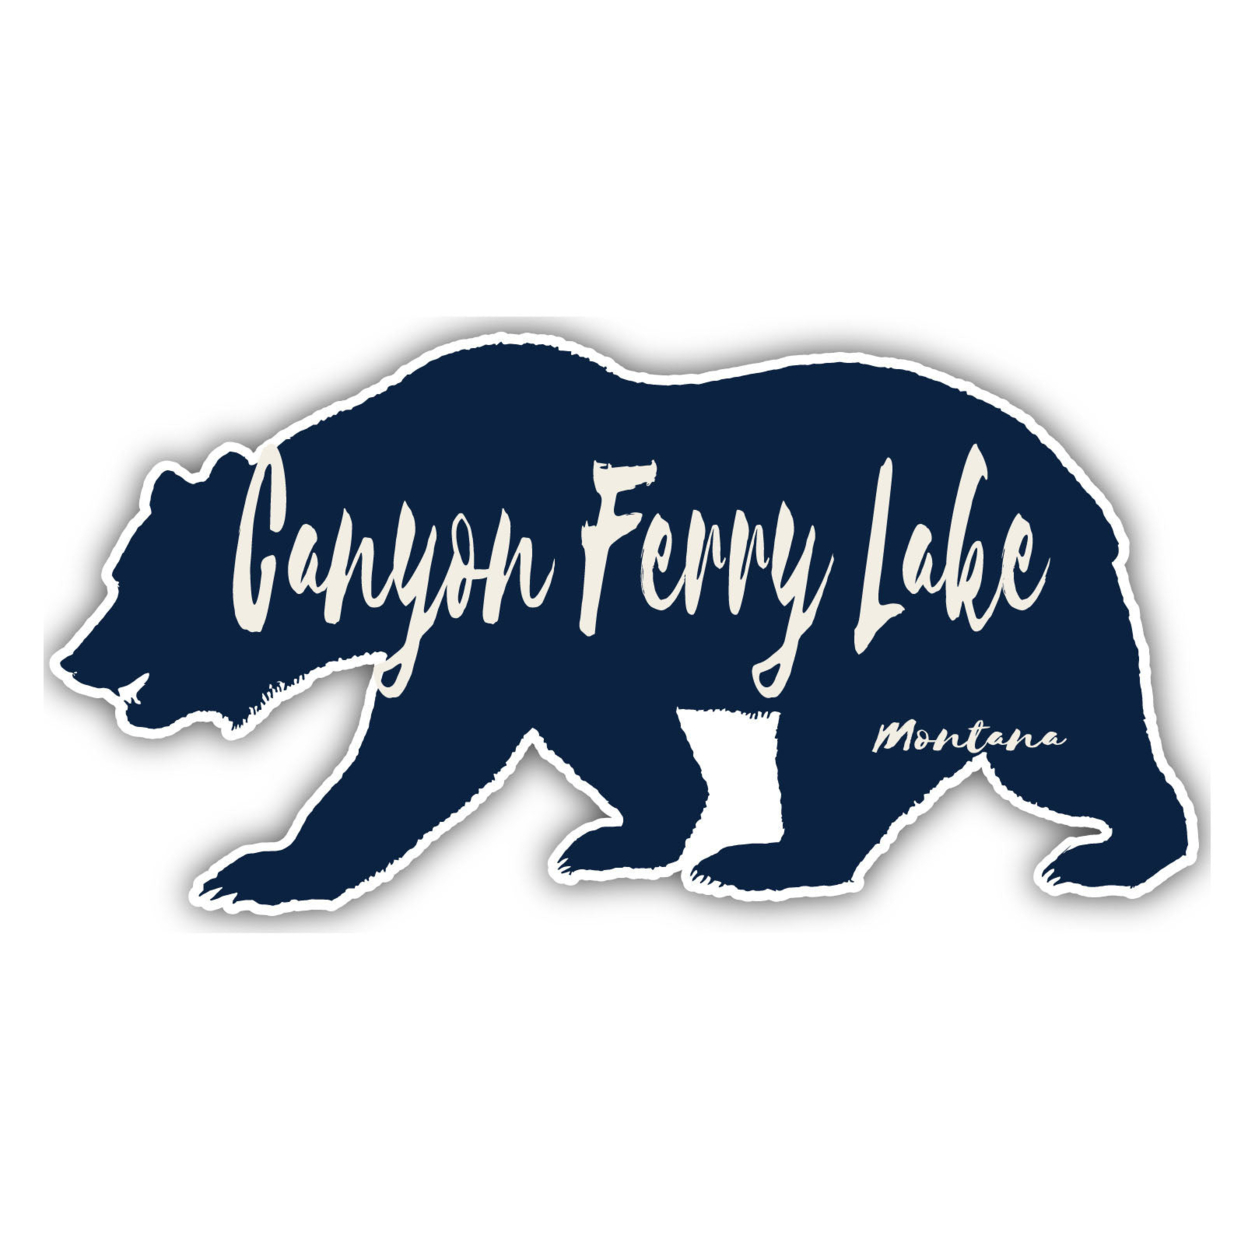 Canyon Ferry Lake Montana Souvenir Decorative Stickers (Choose Theme And Size) - 4-Pack, 4-Inch, Bear